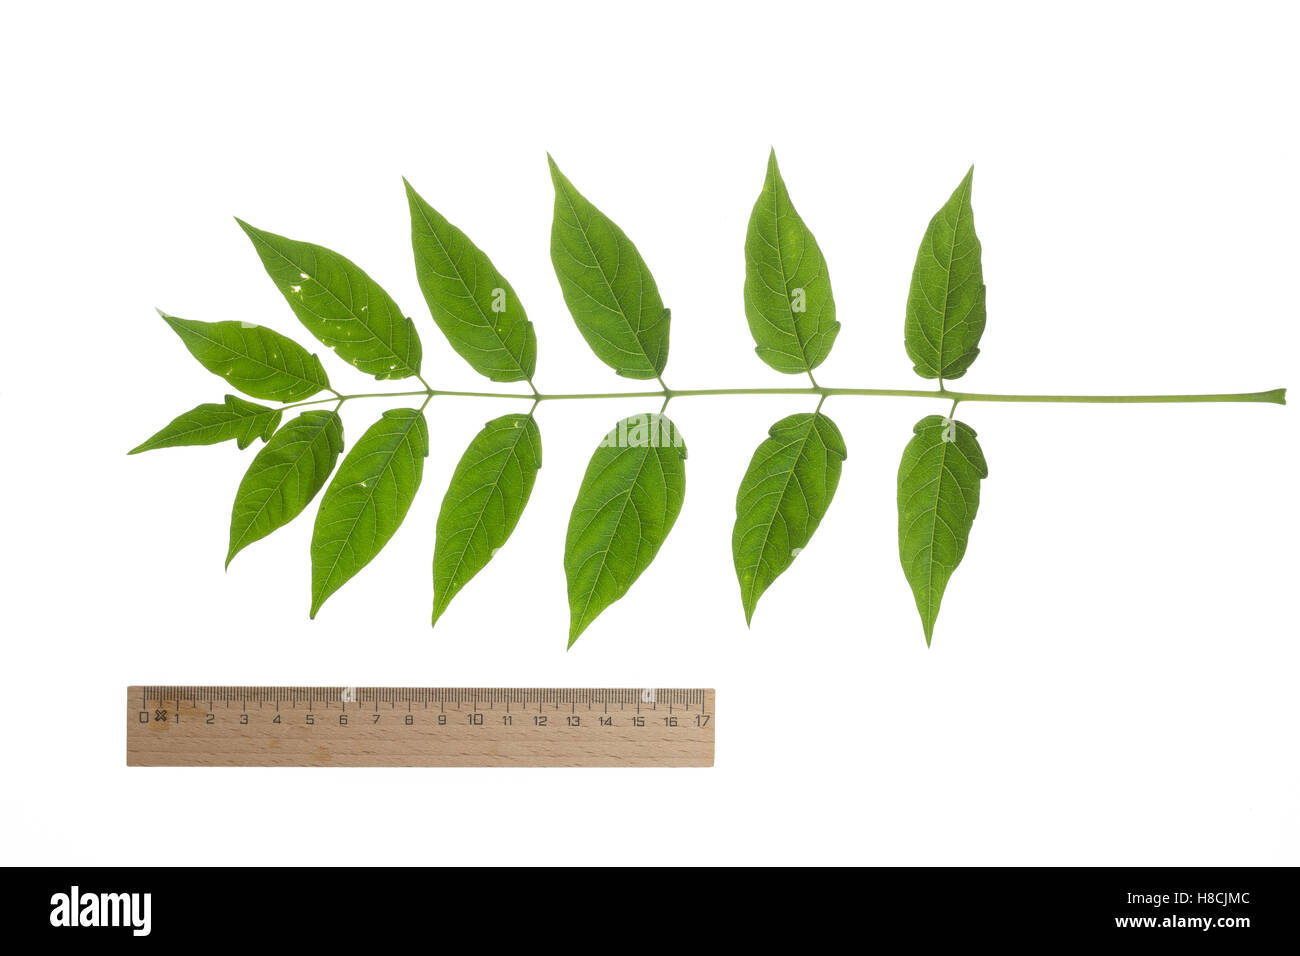 Götterbaum, Chinesischer Götterbaum, Ailanthus altissima, Ailanthus glandulosa, tree of heaven, ailanthus, chouchun, L'Ailante g Stock Photo